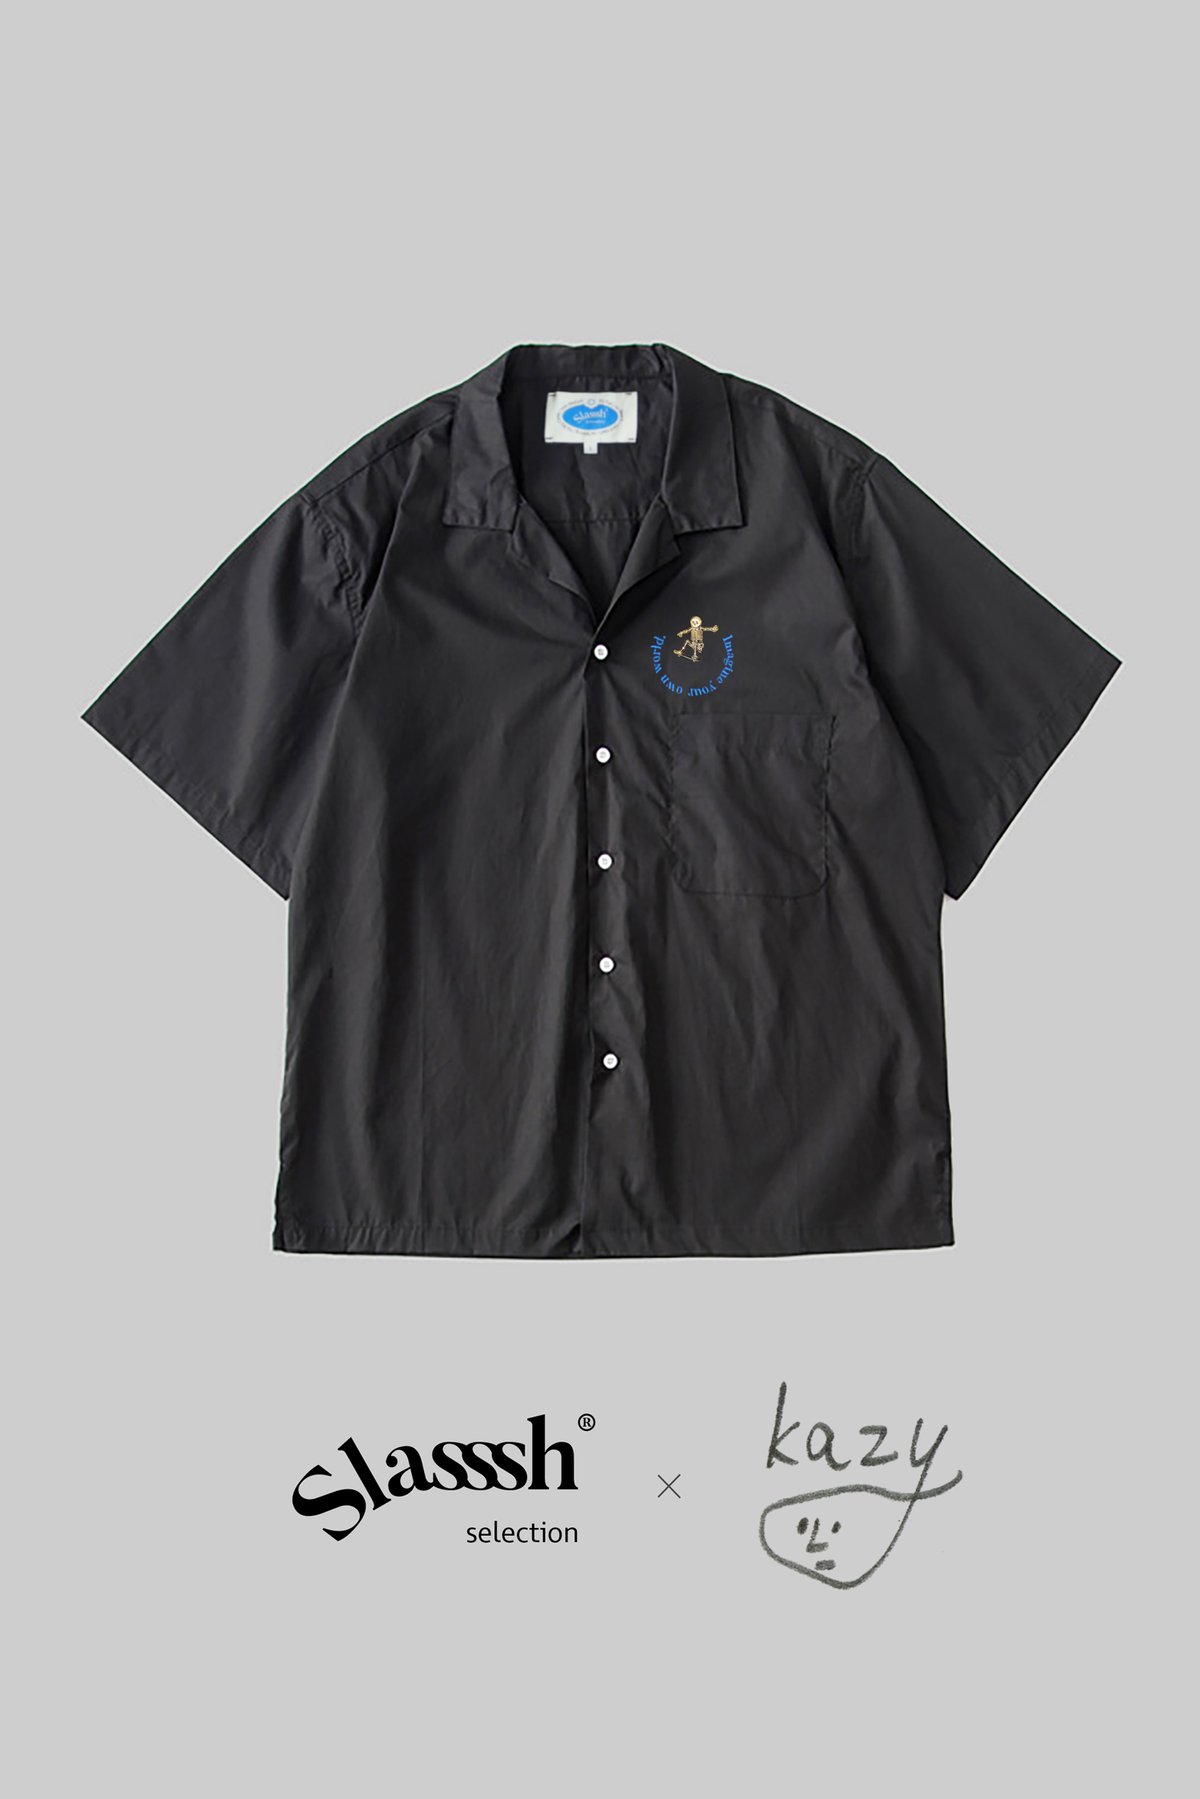 Image of Kazy Chan x Slasssh Embroidery Shirt